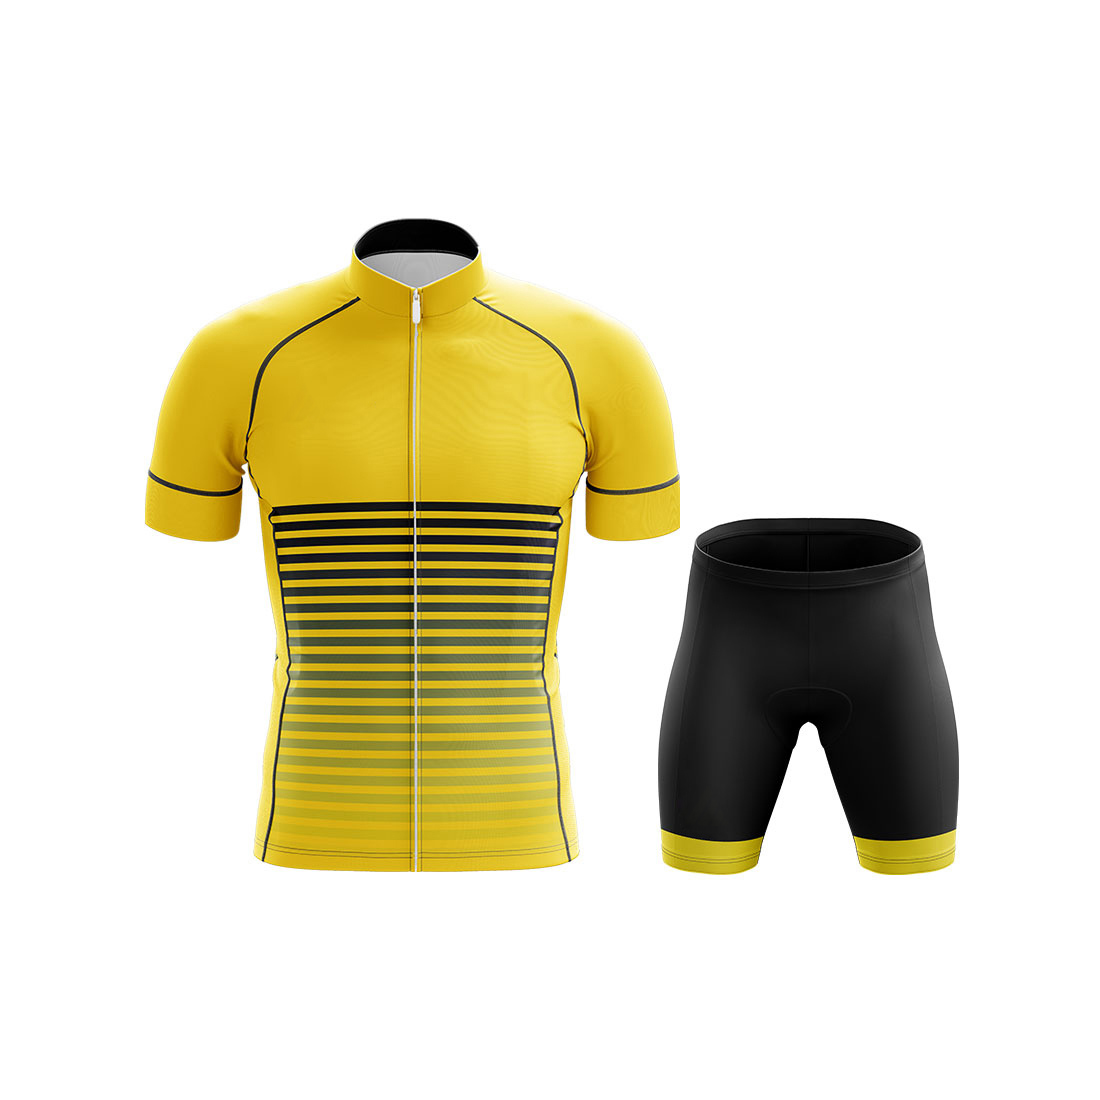 Cycling Uniforms